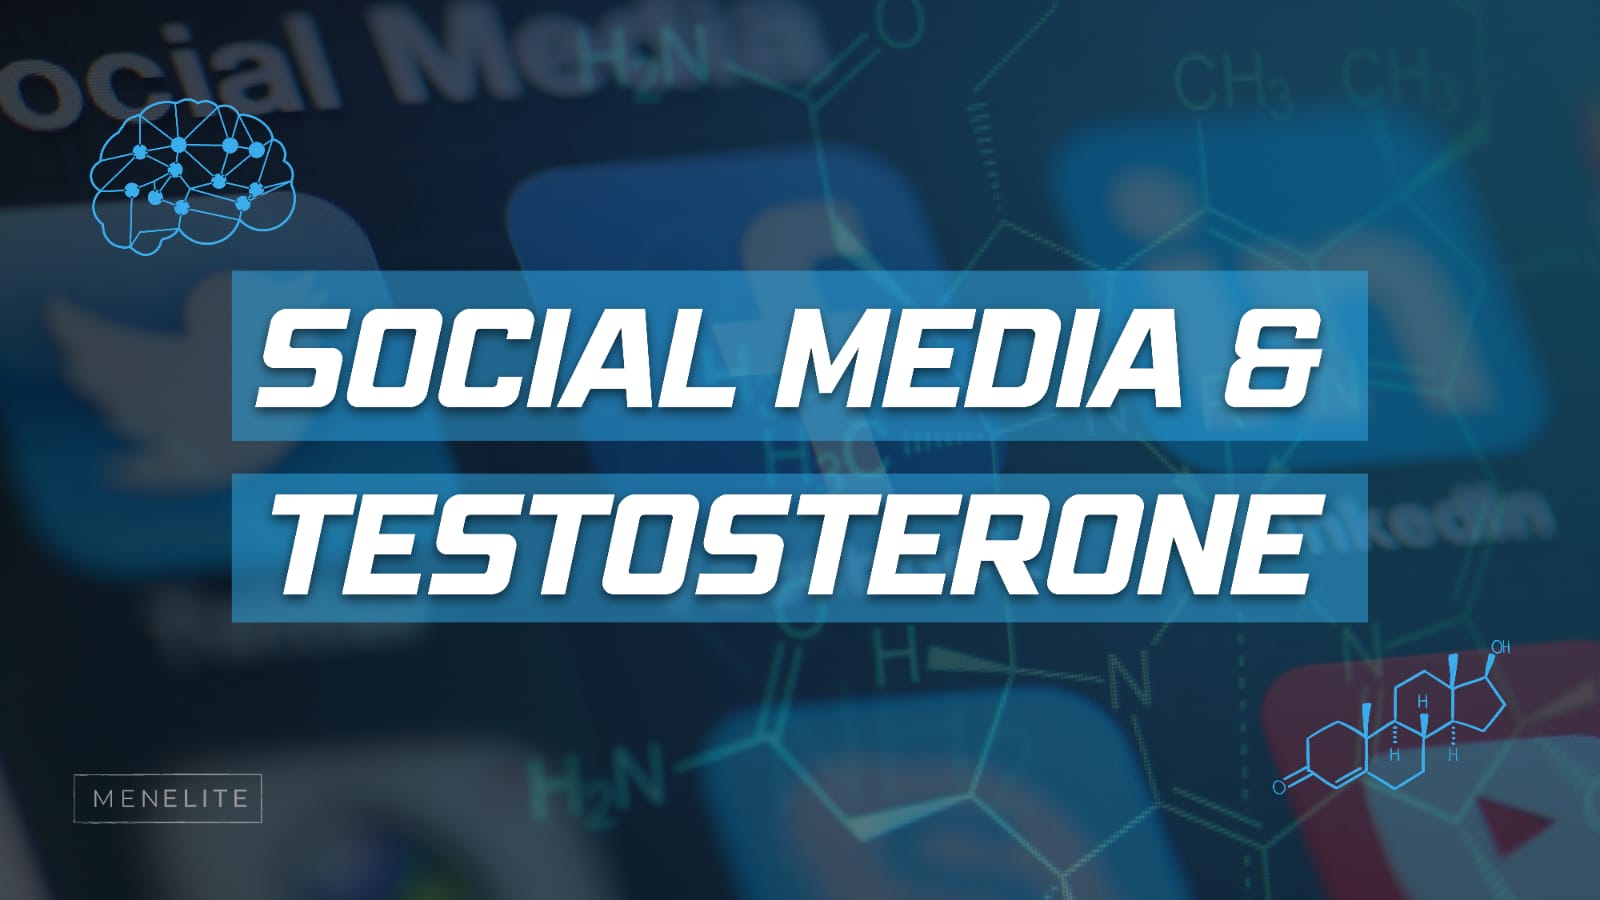 Social media and testosterone